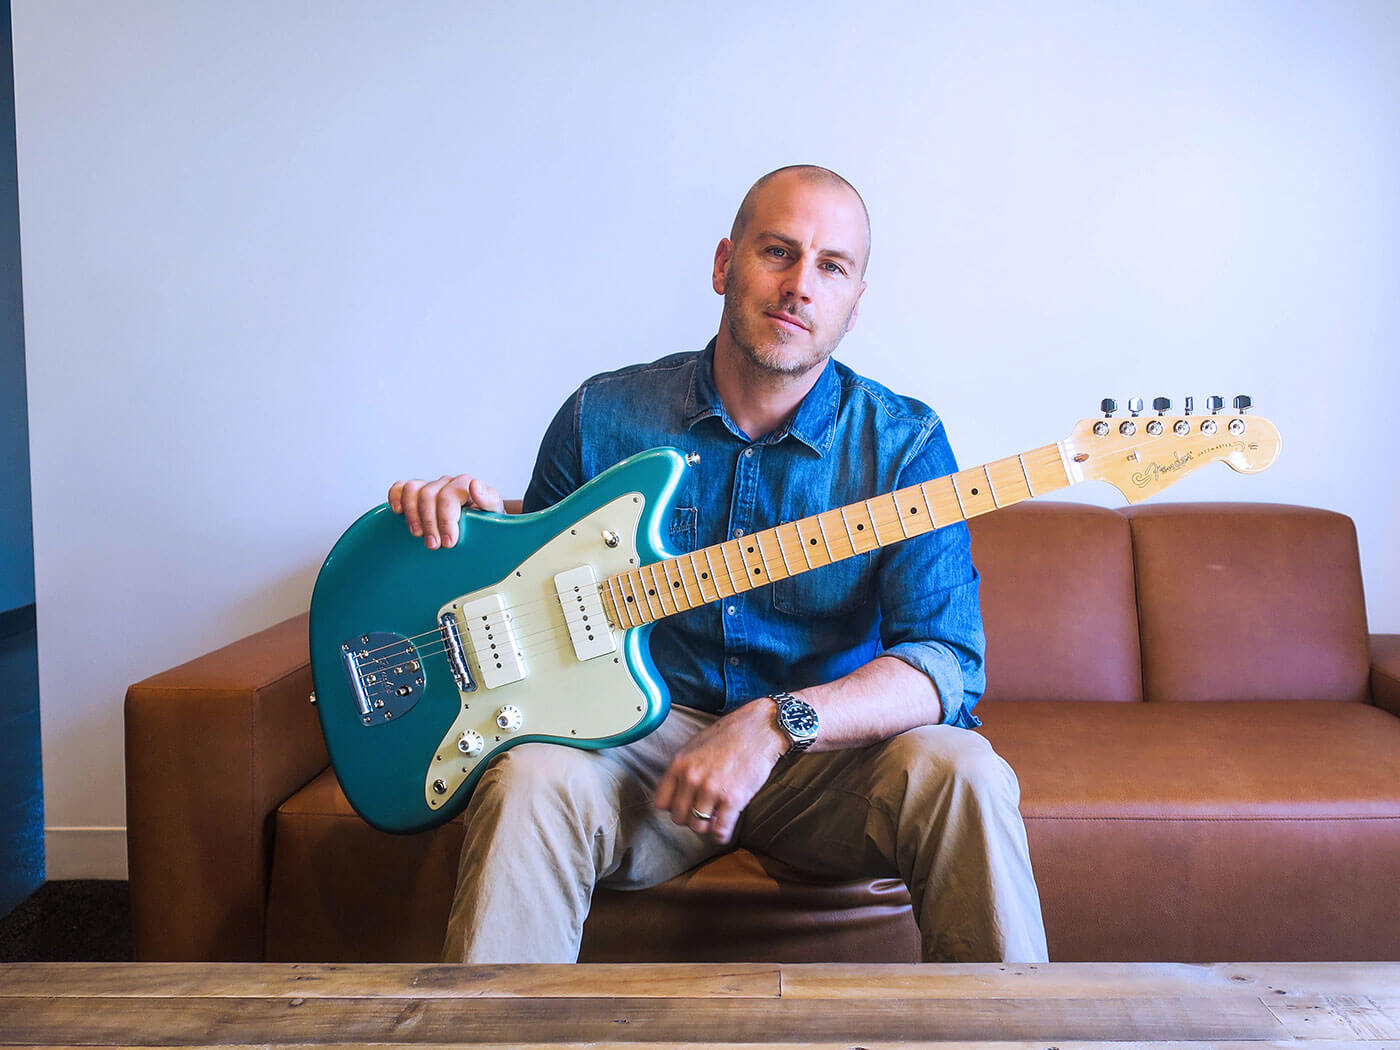 Justin Norvel, Fender's EVP of product